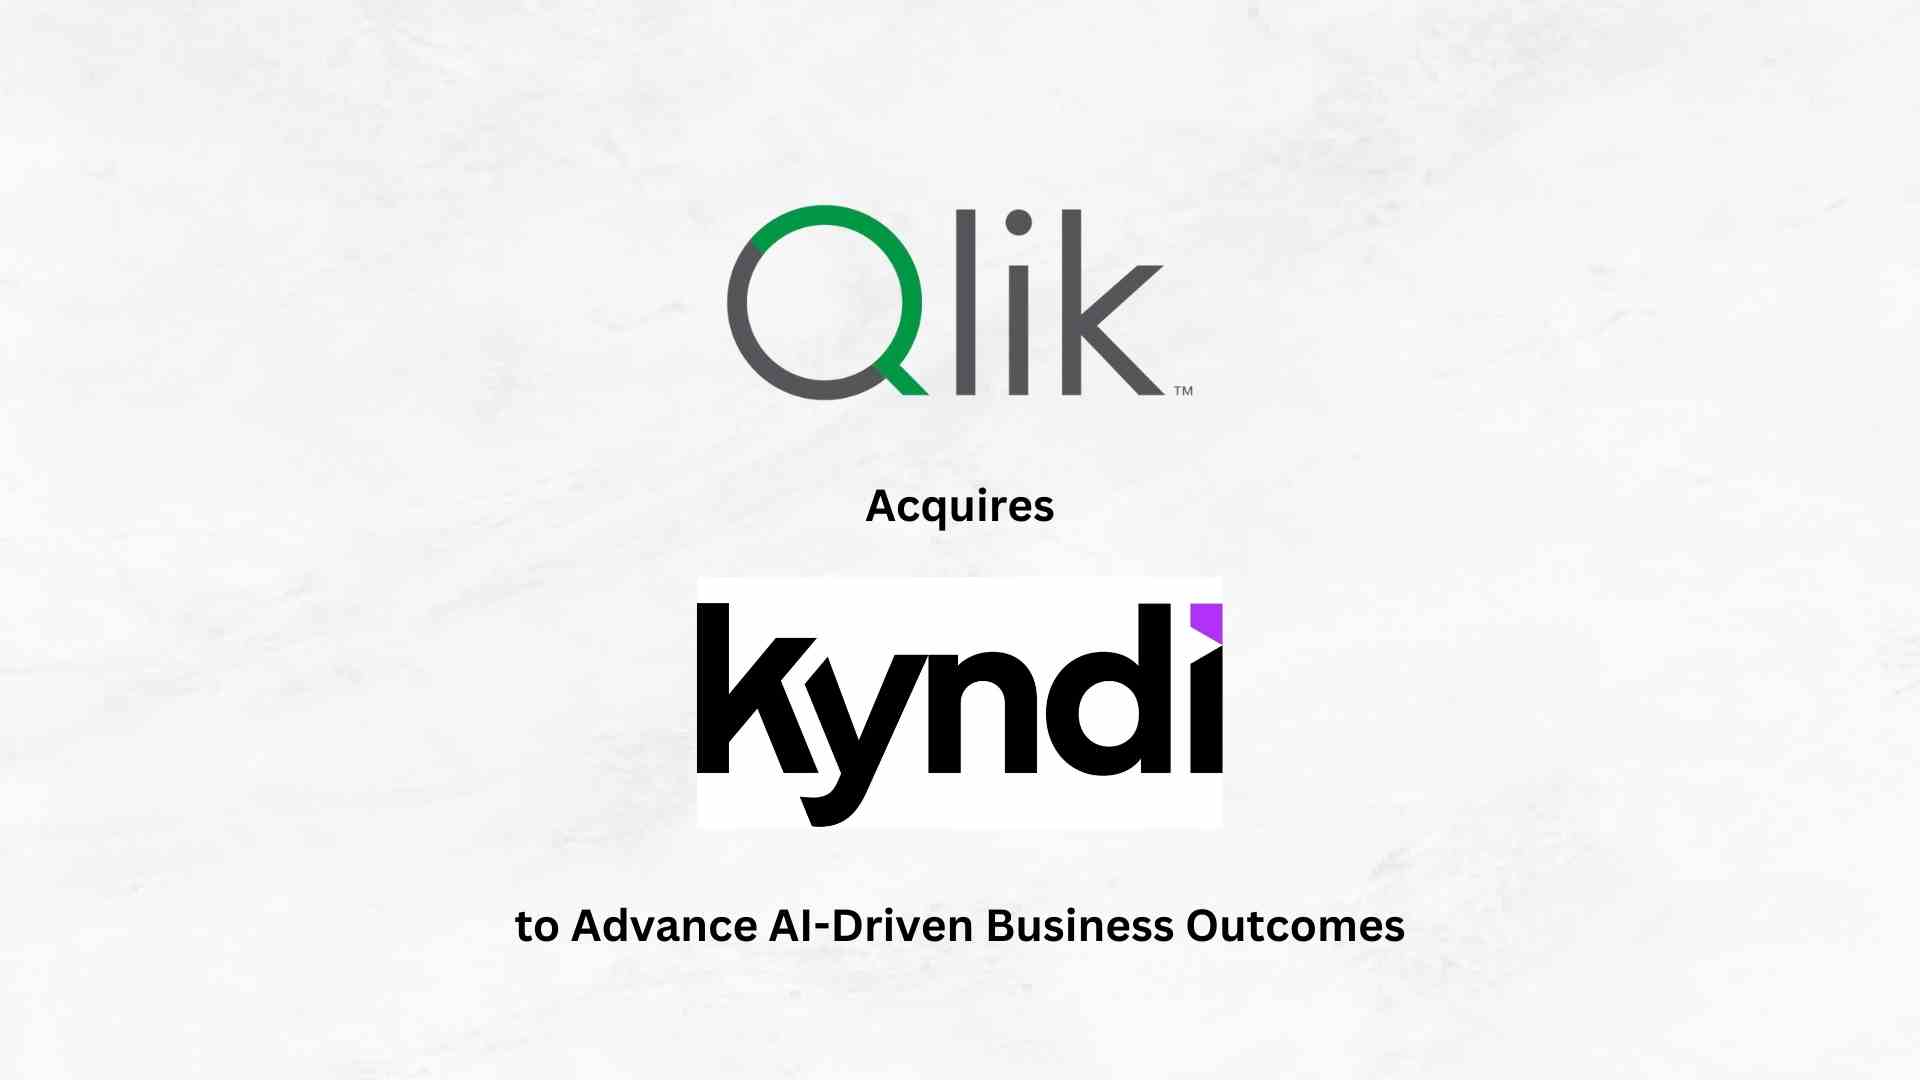 Qlik Acquires Kyndi to Advance AI-Driven Business Outcomes